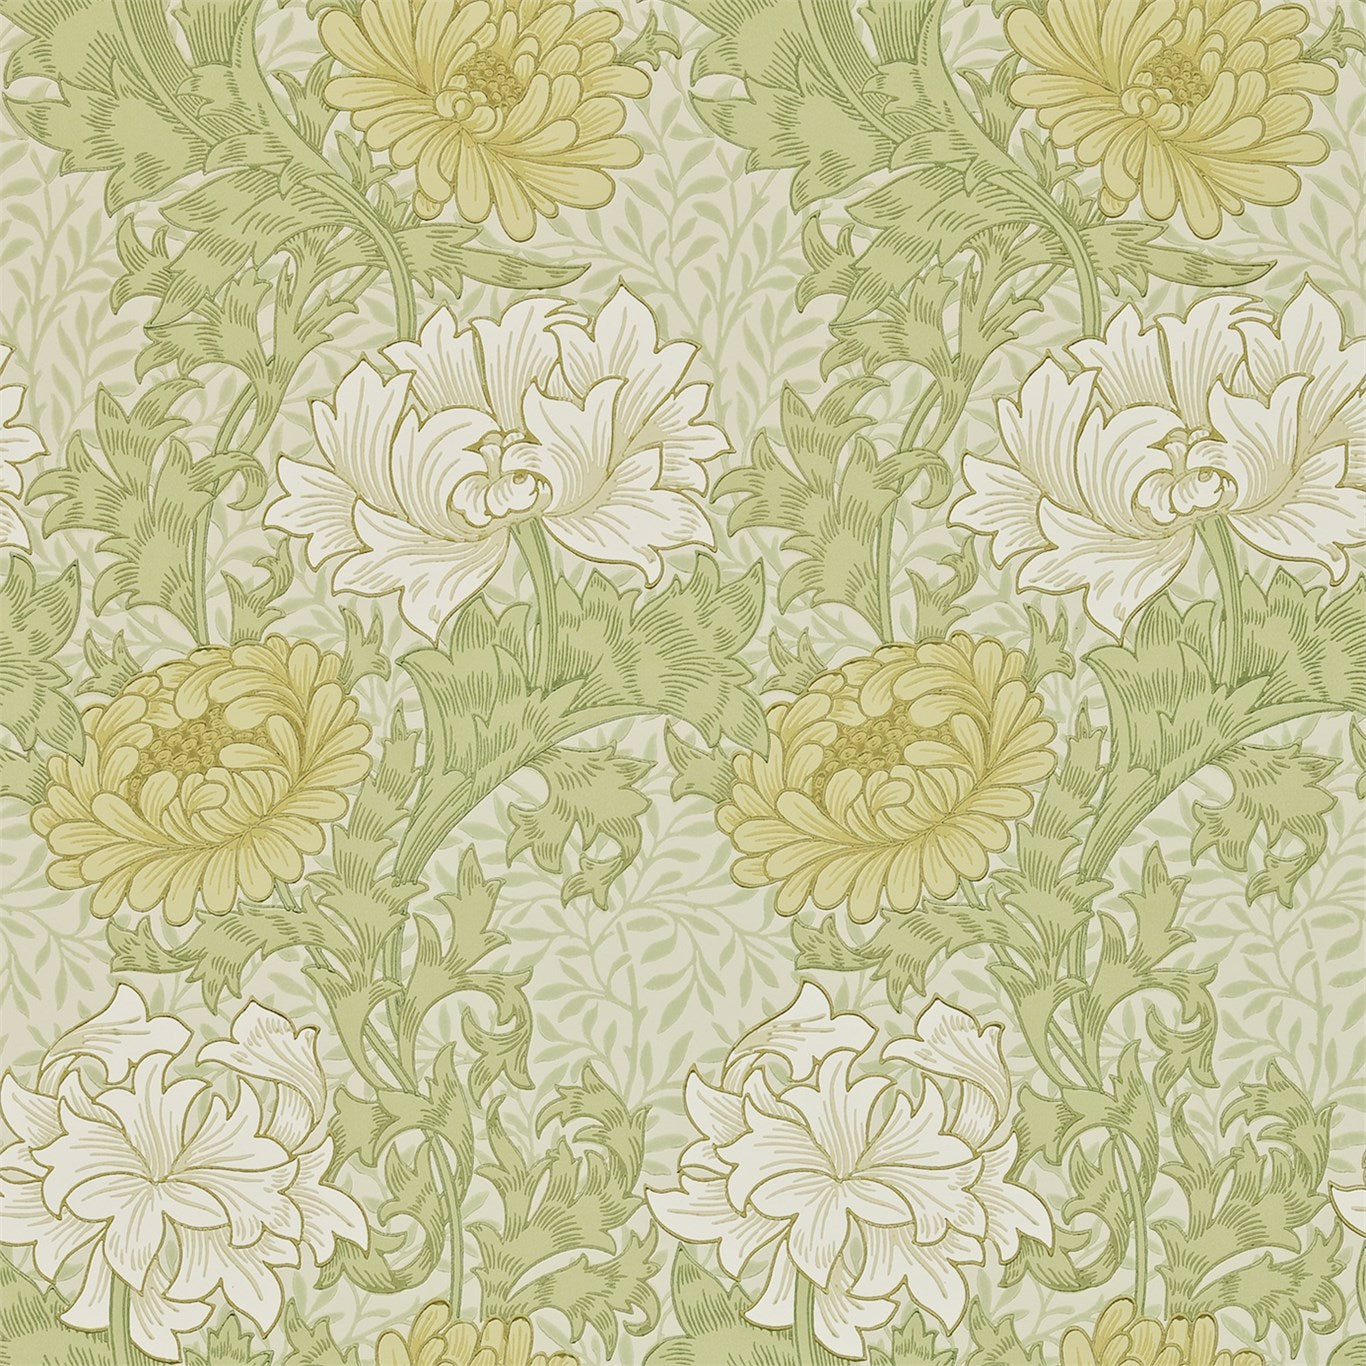 Chrysanthemum Pale Olive Wallpaper DARW212545 by Morris & Co